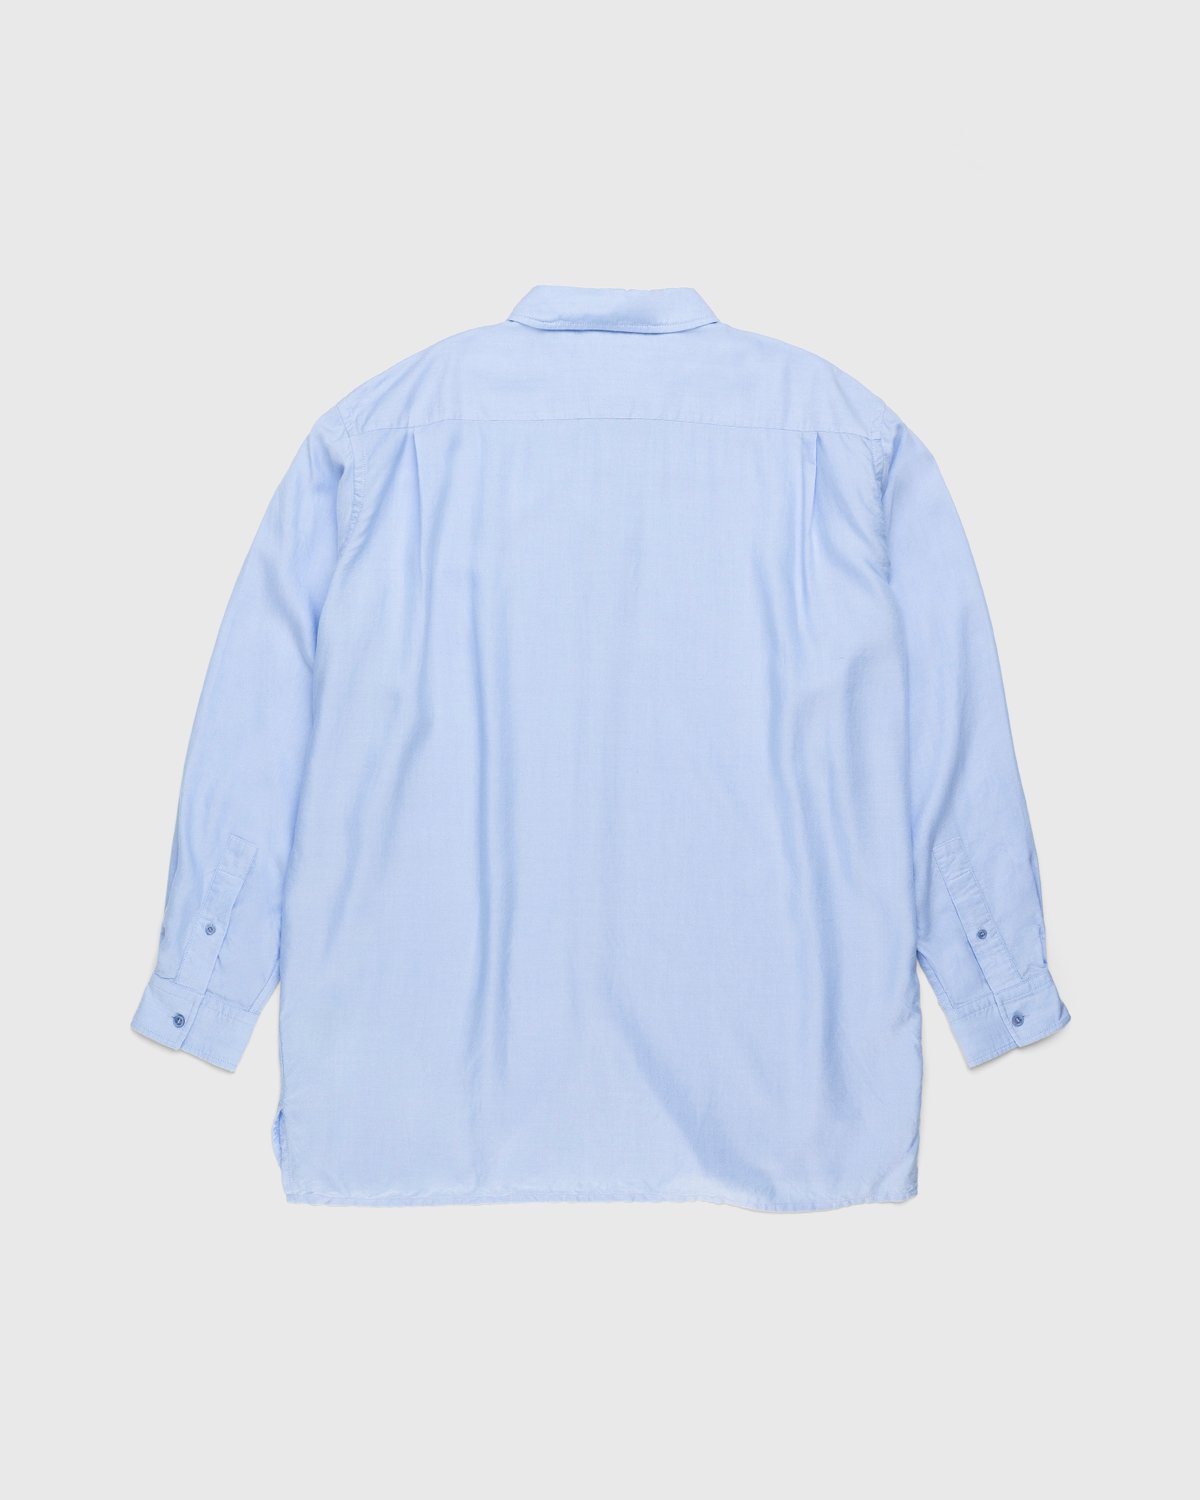 Acne Studios - Classic Monogram Button-Up Shirt Light Blue - Clothing - Blue - Image 2